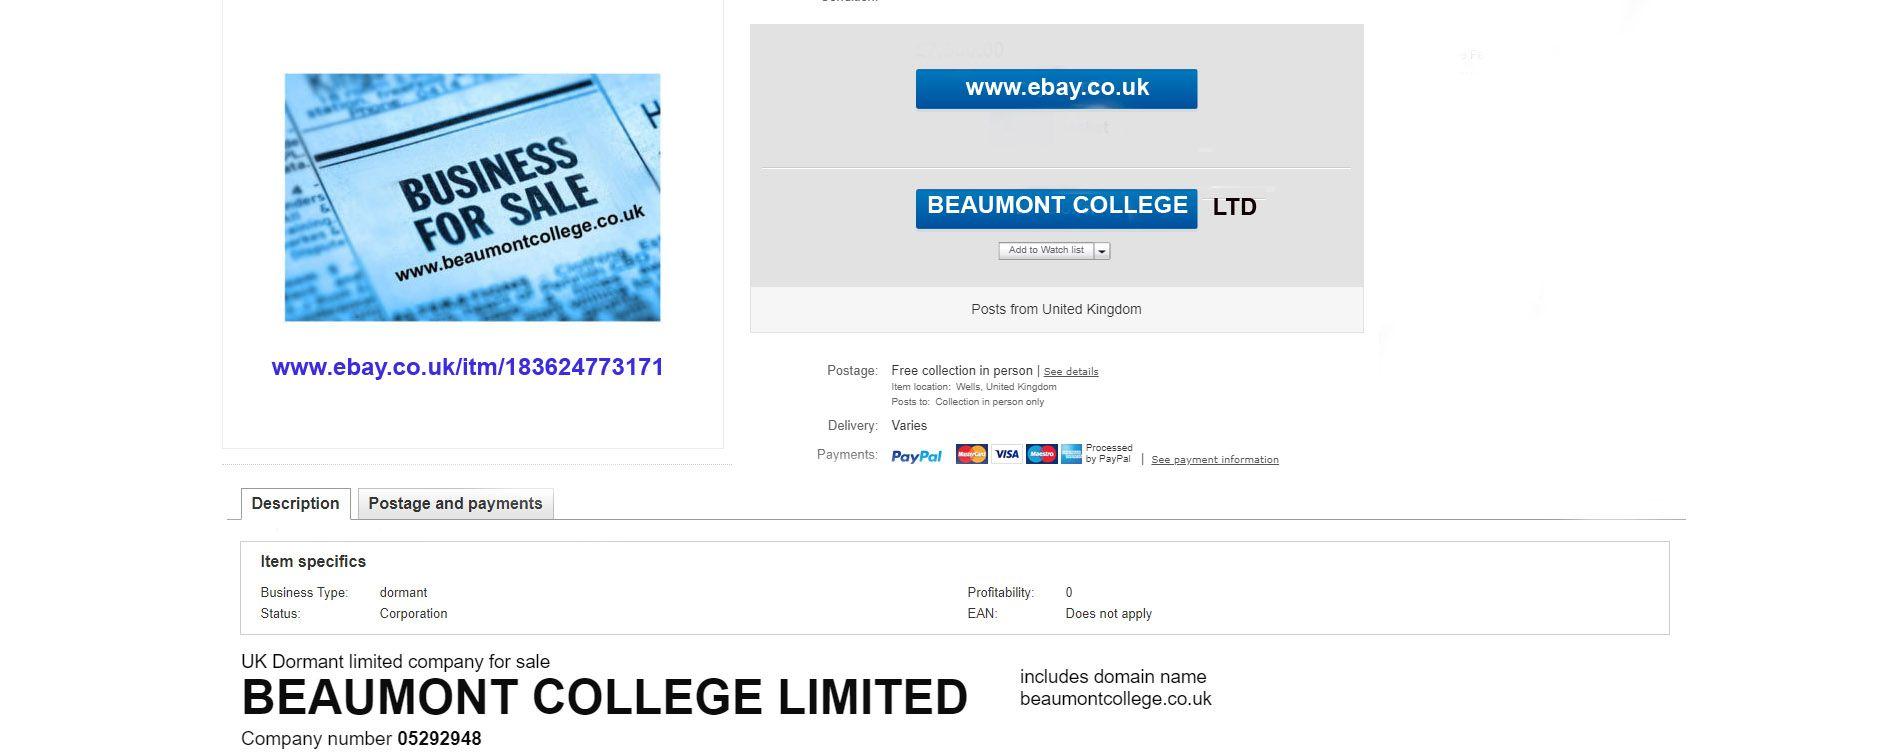 Beaumont College Logo - Beaumont College Ltd